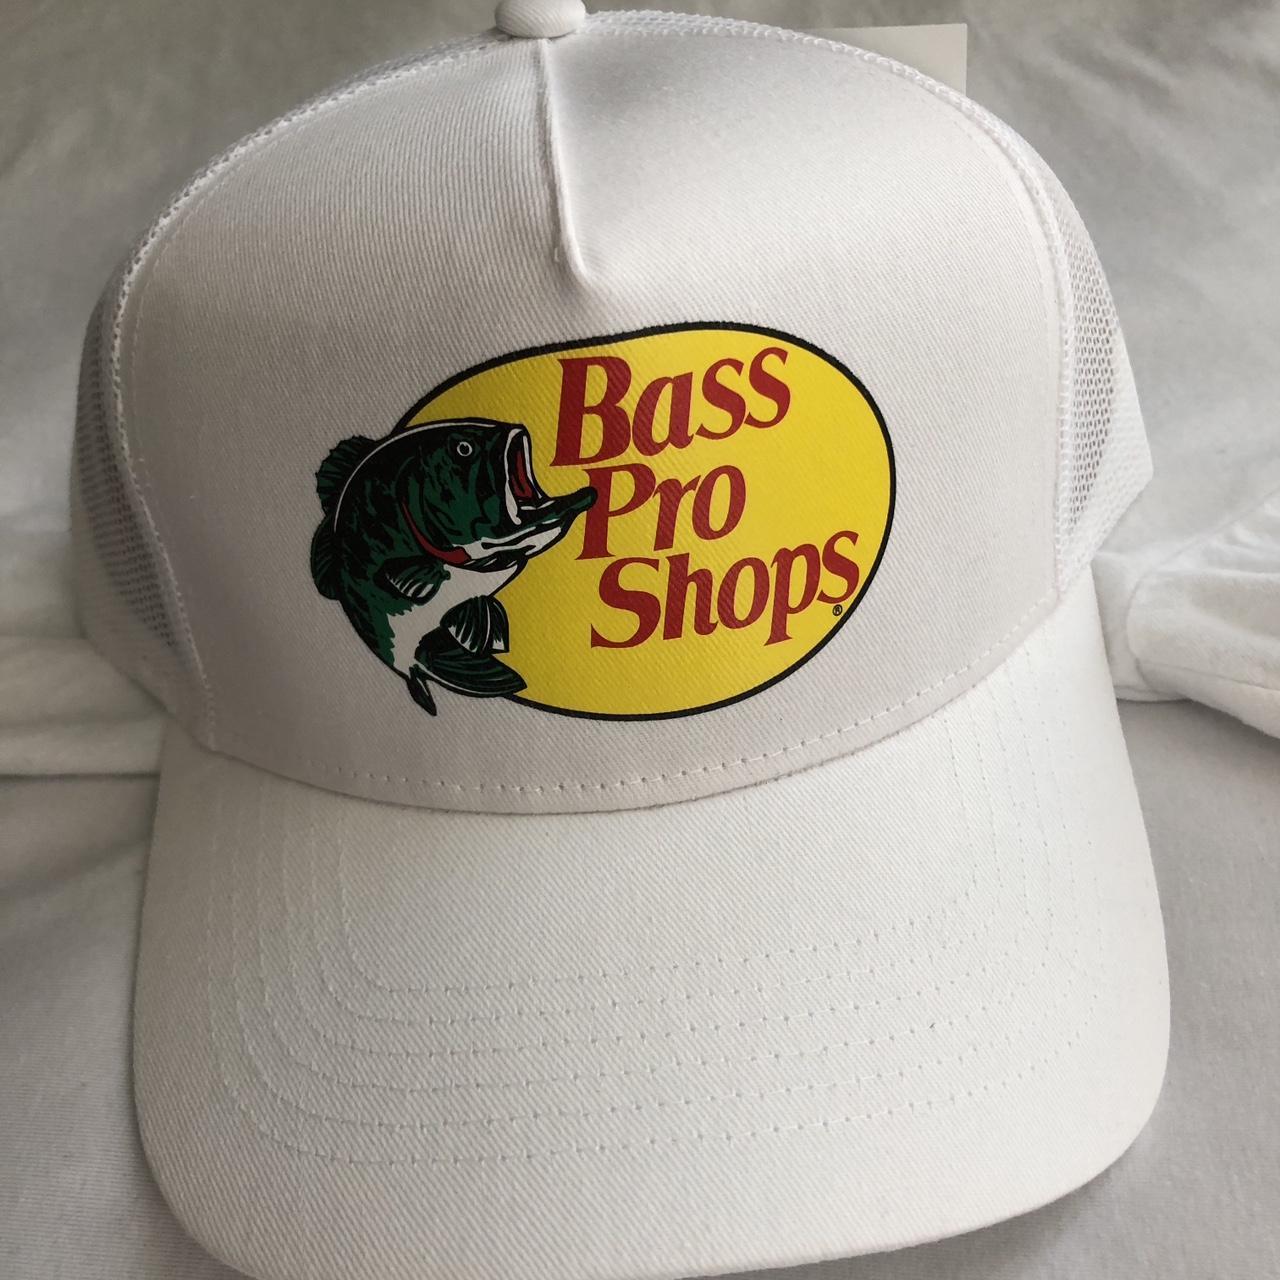 Brand new white bass pro hats - Depop